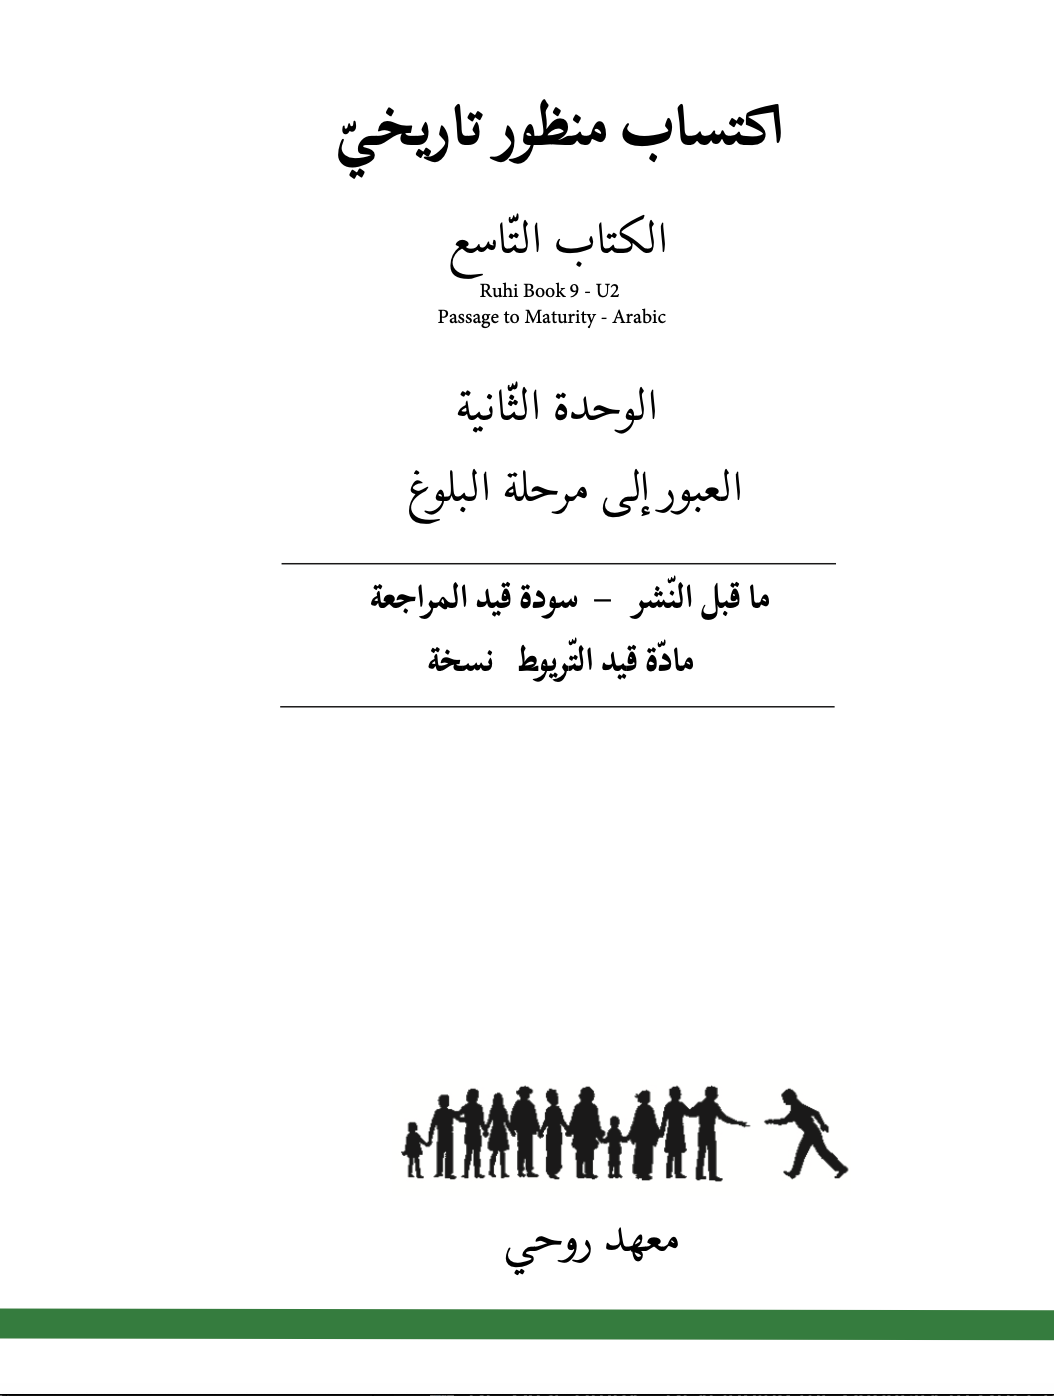 Book 9 Unit 2 - Arabic